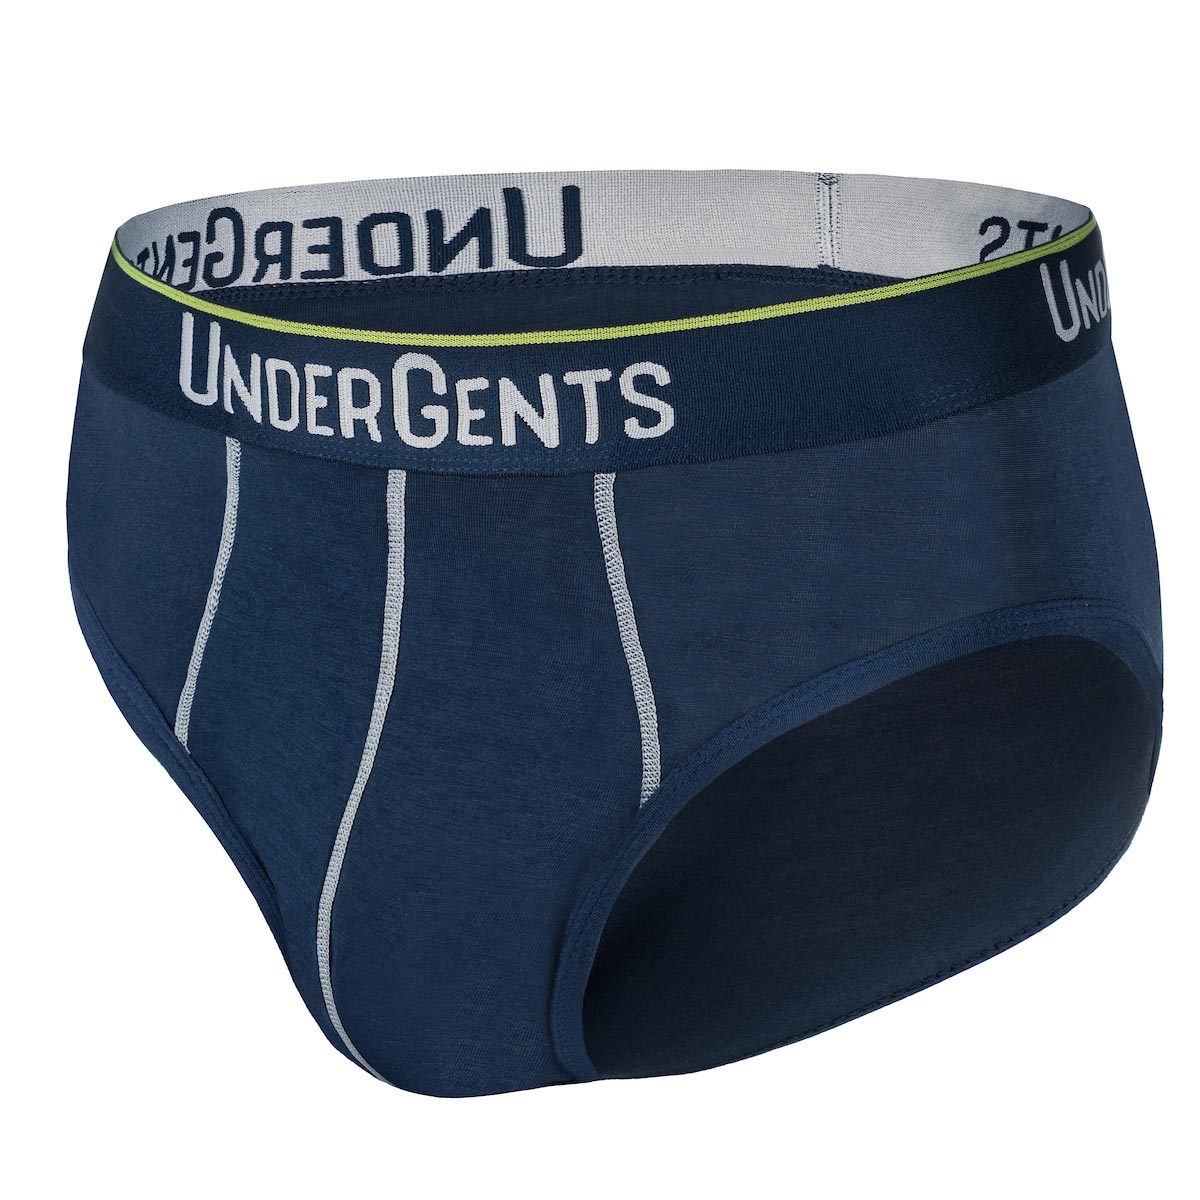 Running Underwear for Men: 11 Top Picks from a Daily 5K Runner, by Jason  Stucki